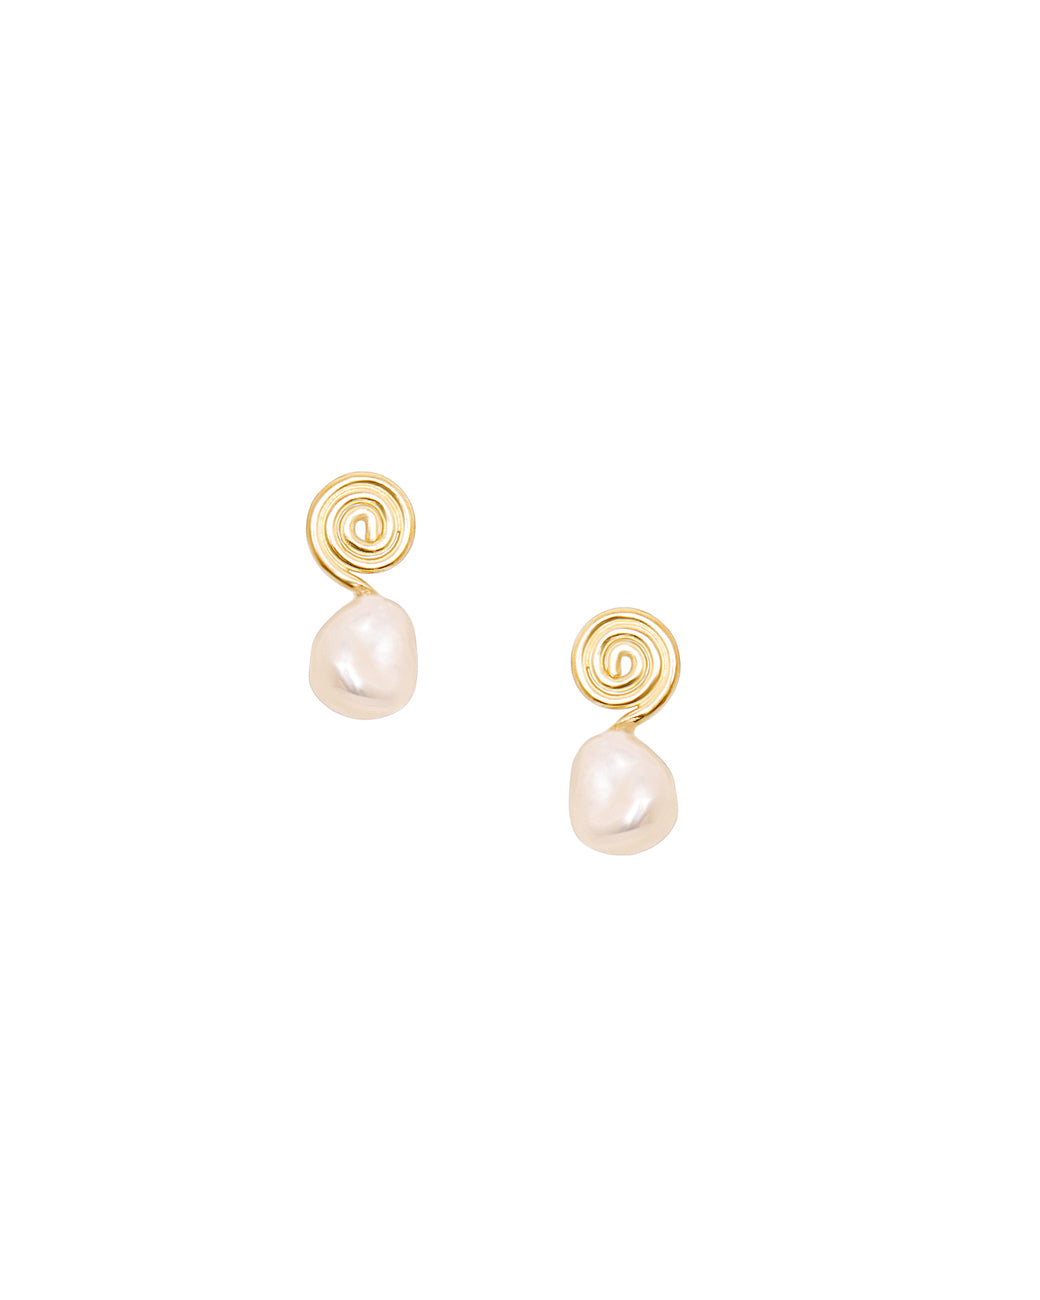 Spiral pearl Stud Earrings | 9ct Single Mine Origin Gold